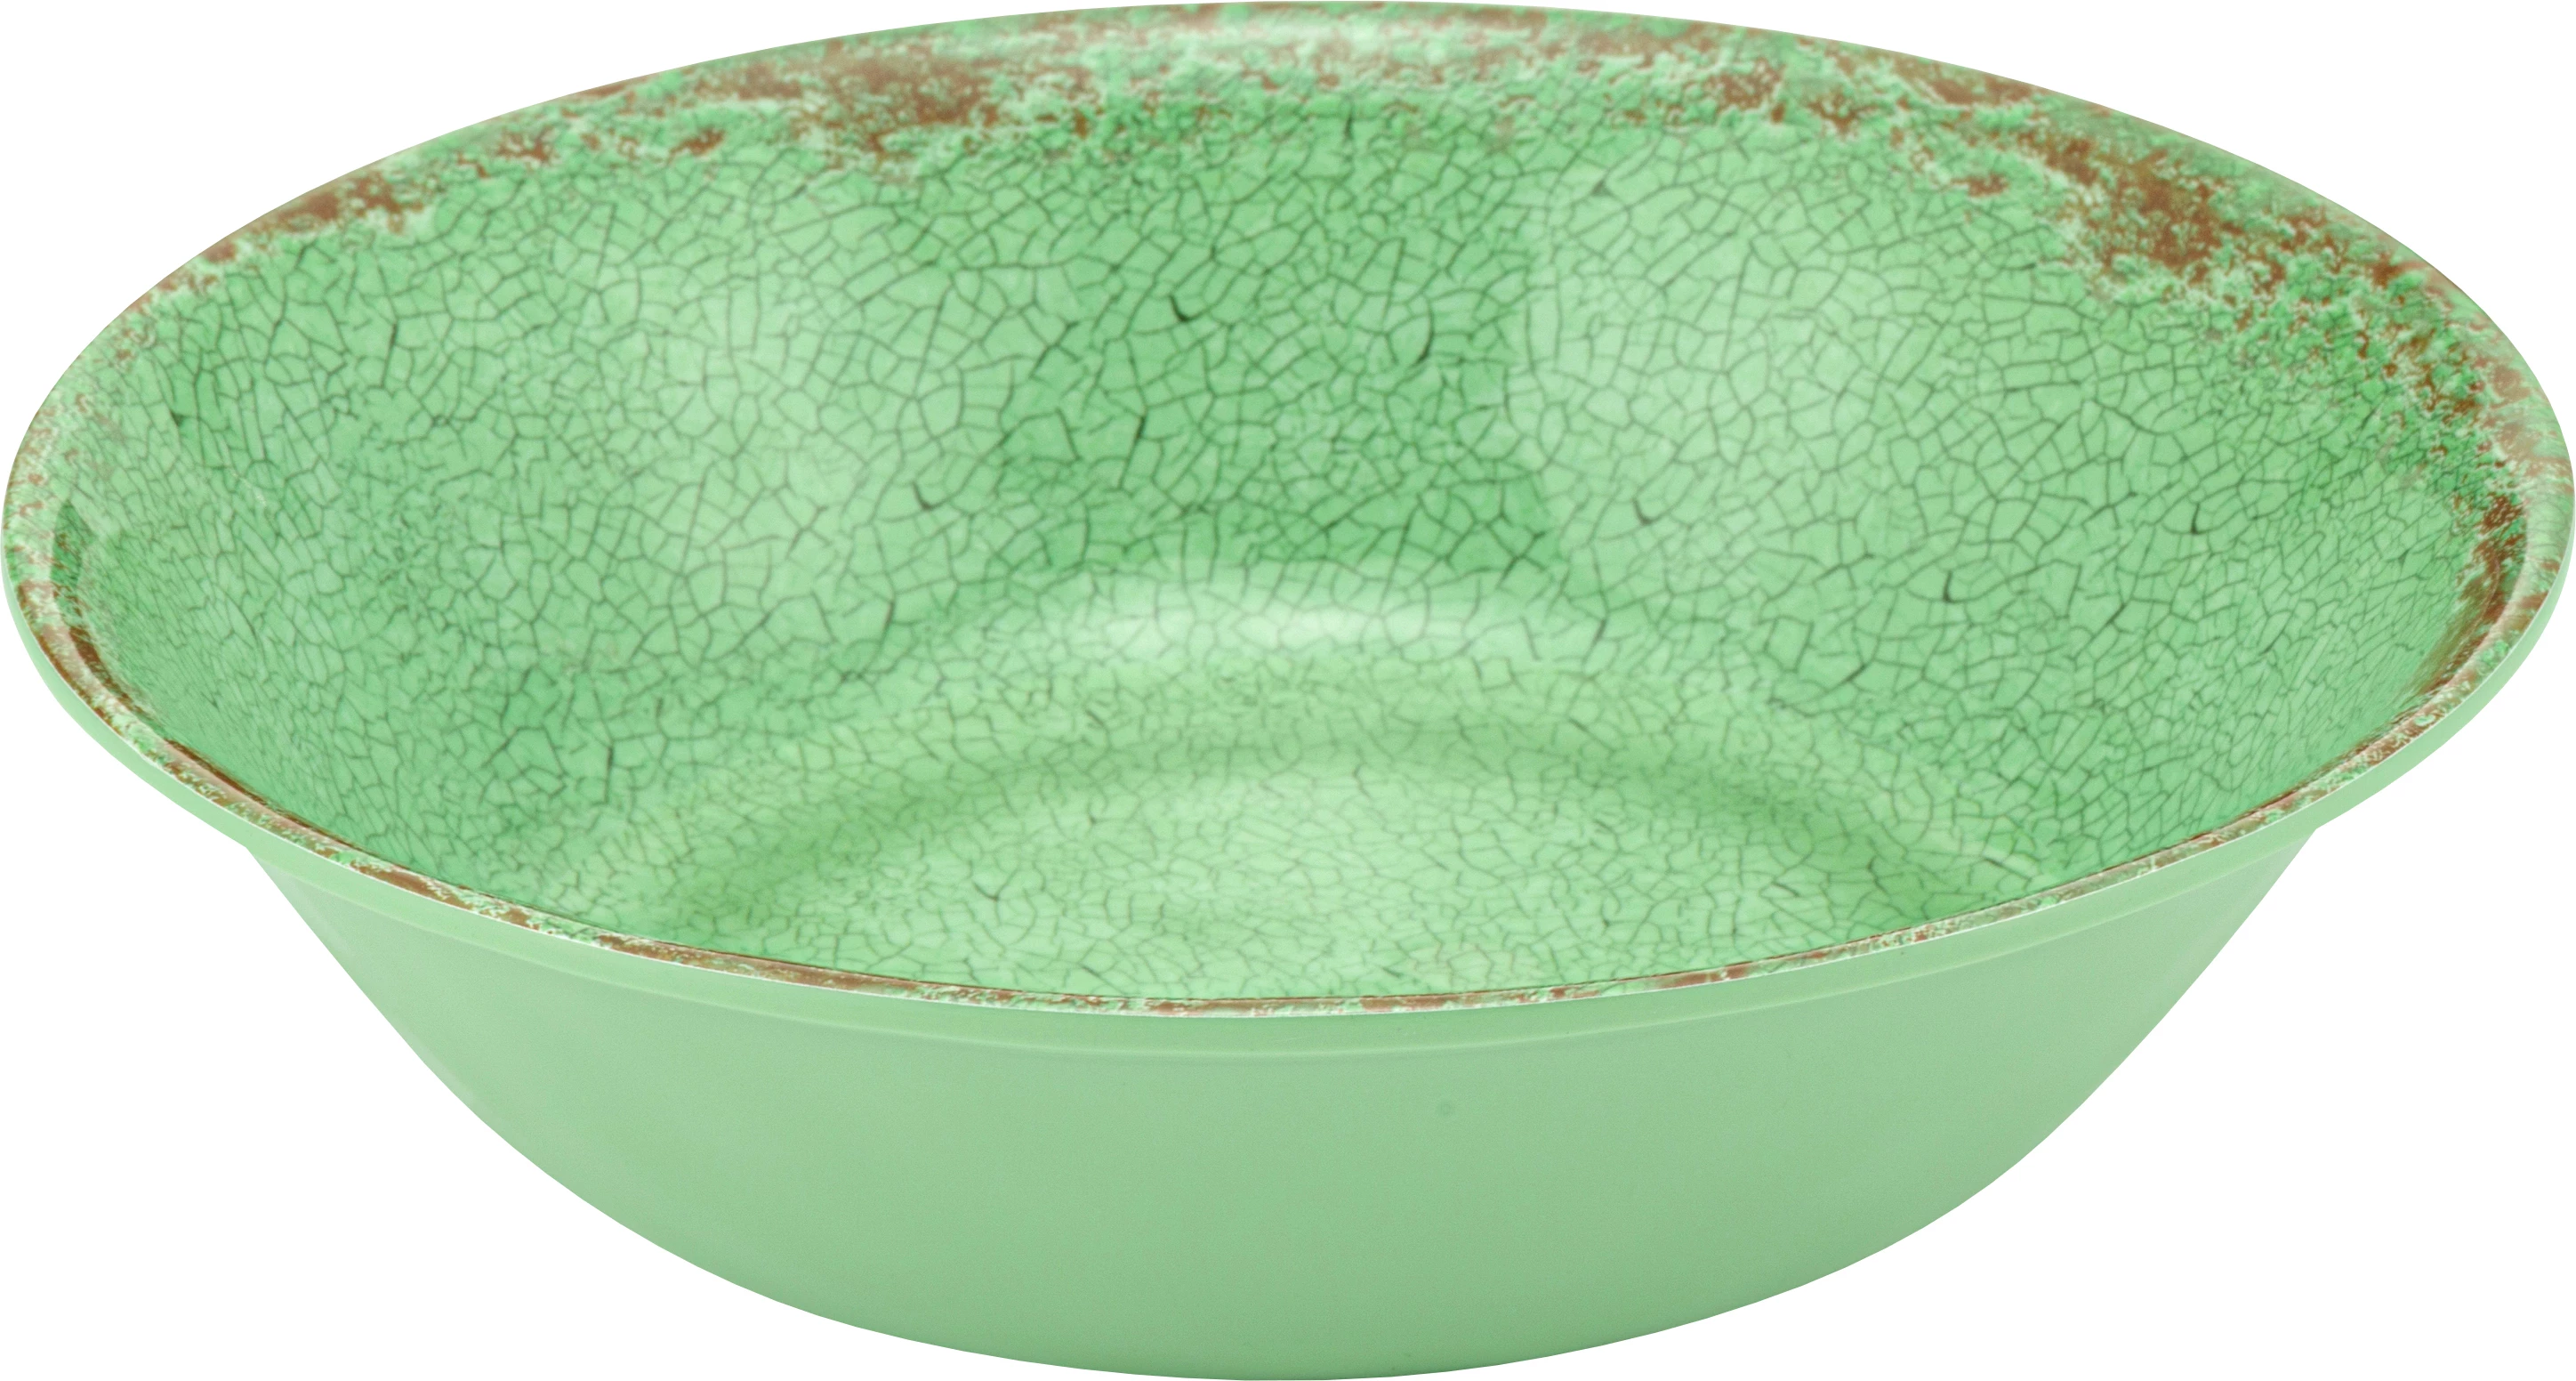 Dalebrook Casablanca skål, grøn, 60 cl, ø19 cm